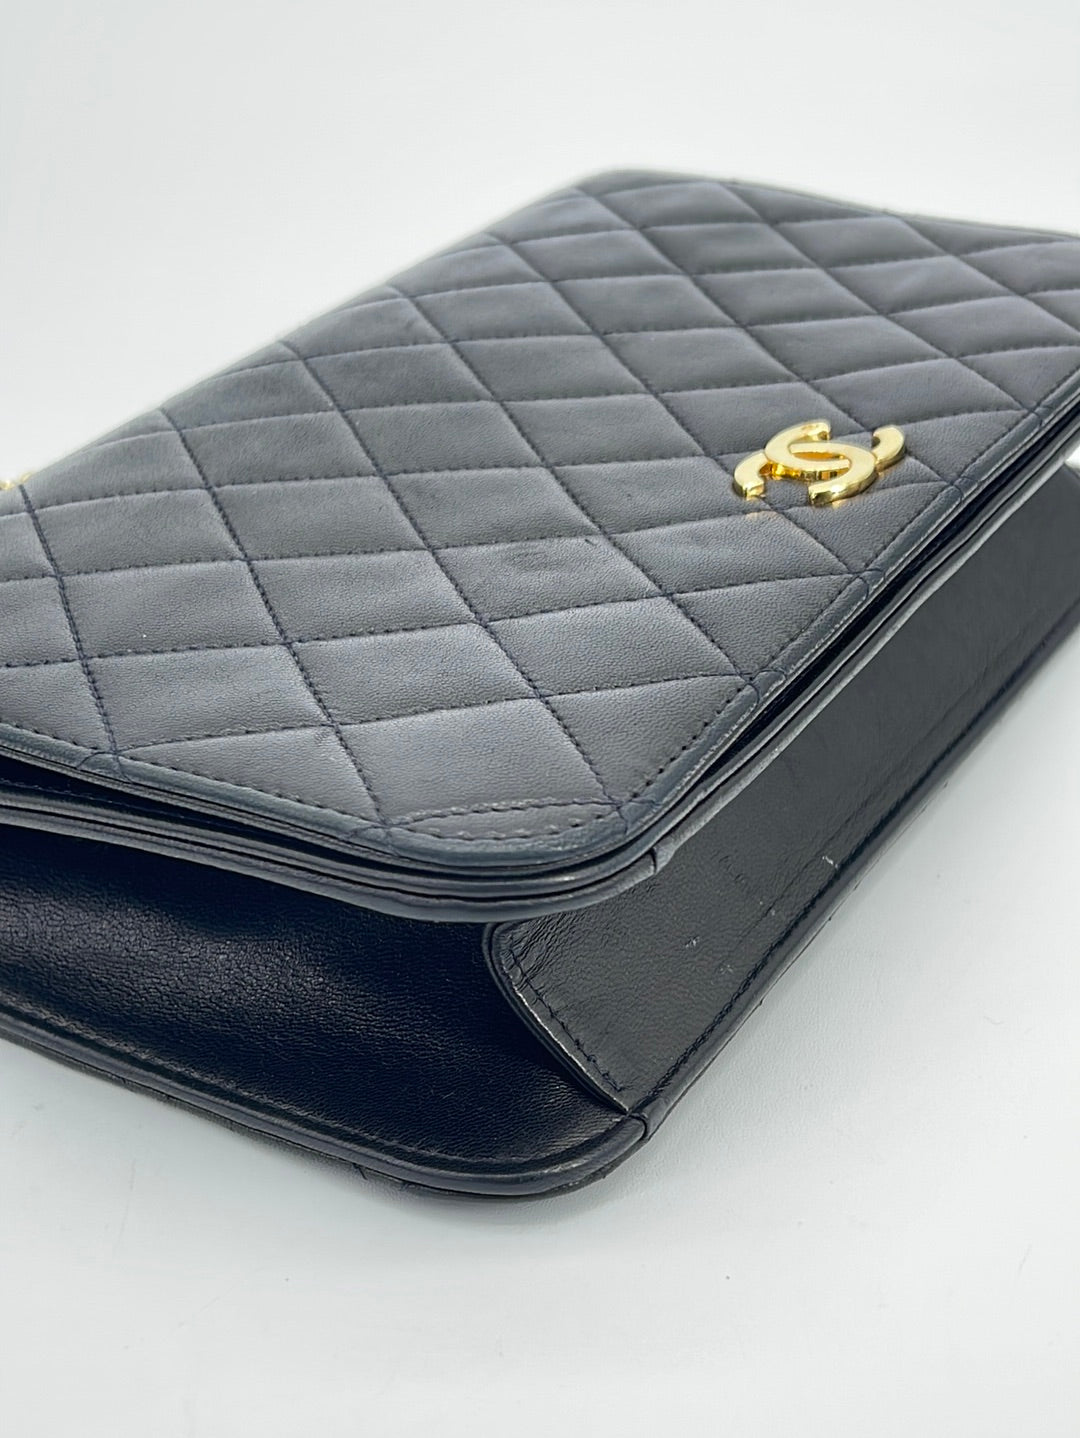 leather chanel handbags authentic